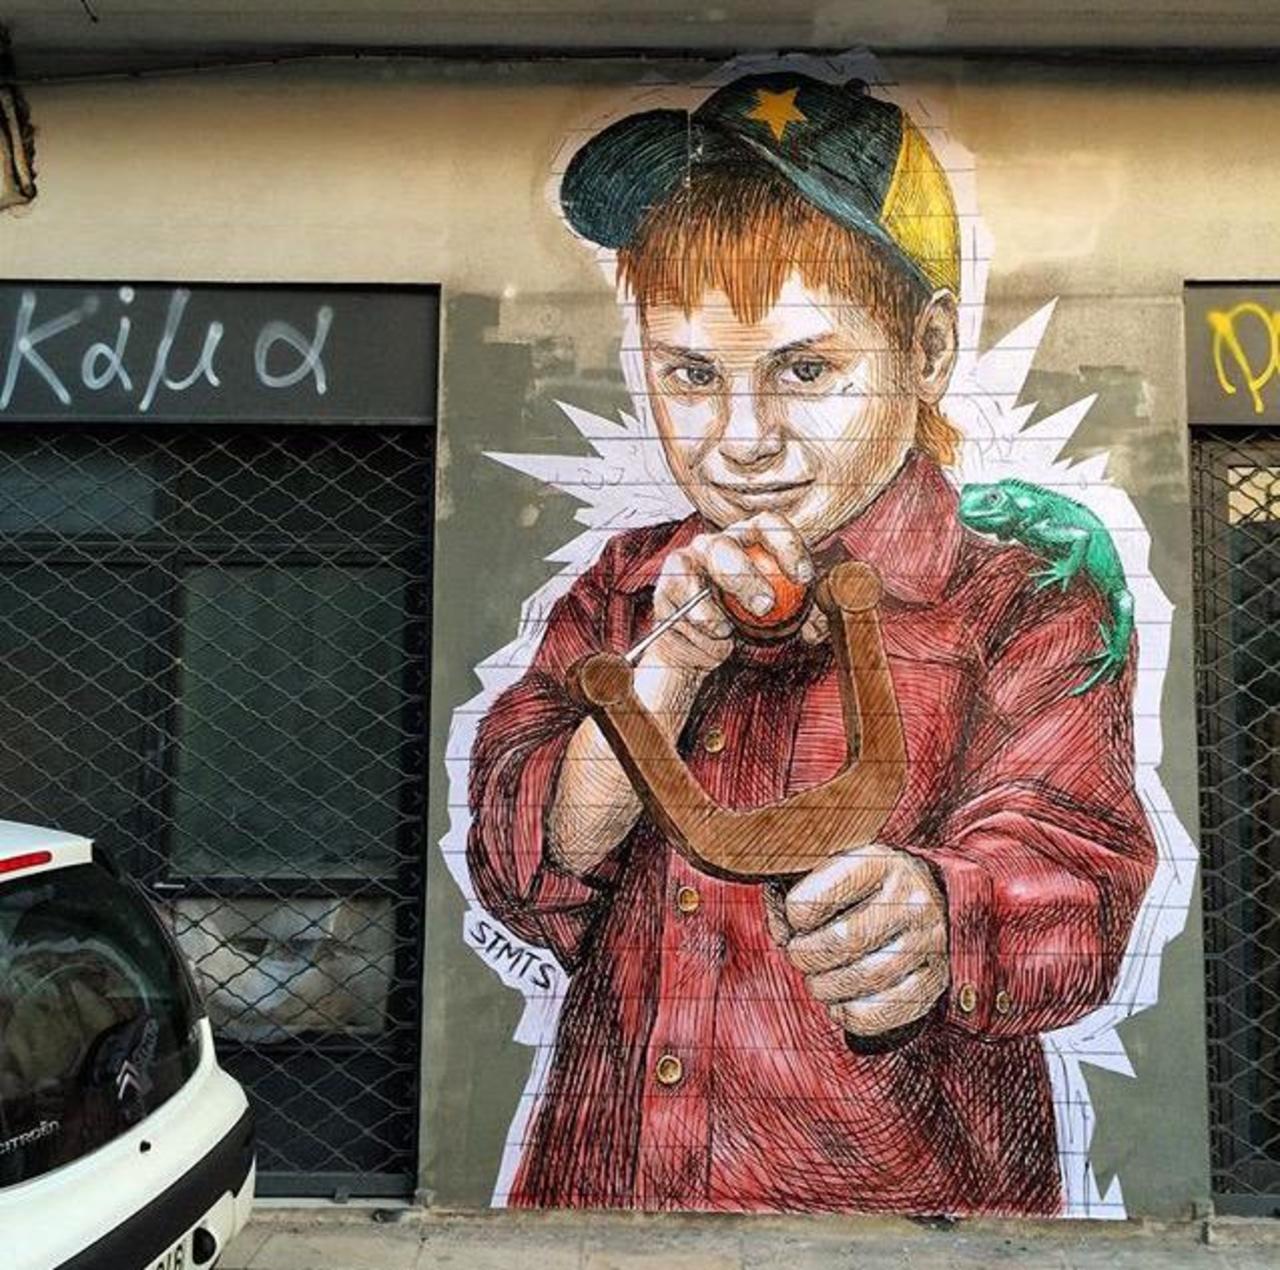 Street Art by STMTS in Athens

#art #graffiti #mural #streetart http://t.co/5QaIw6nqxC